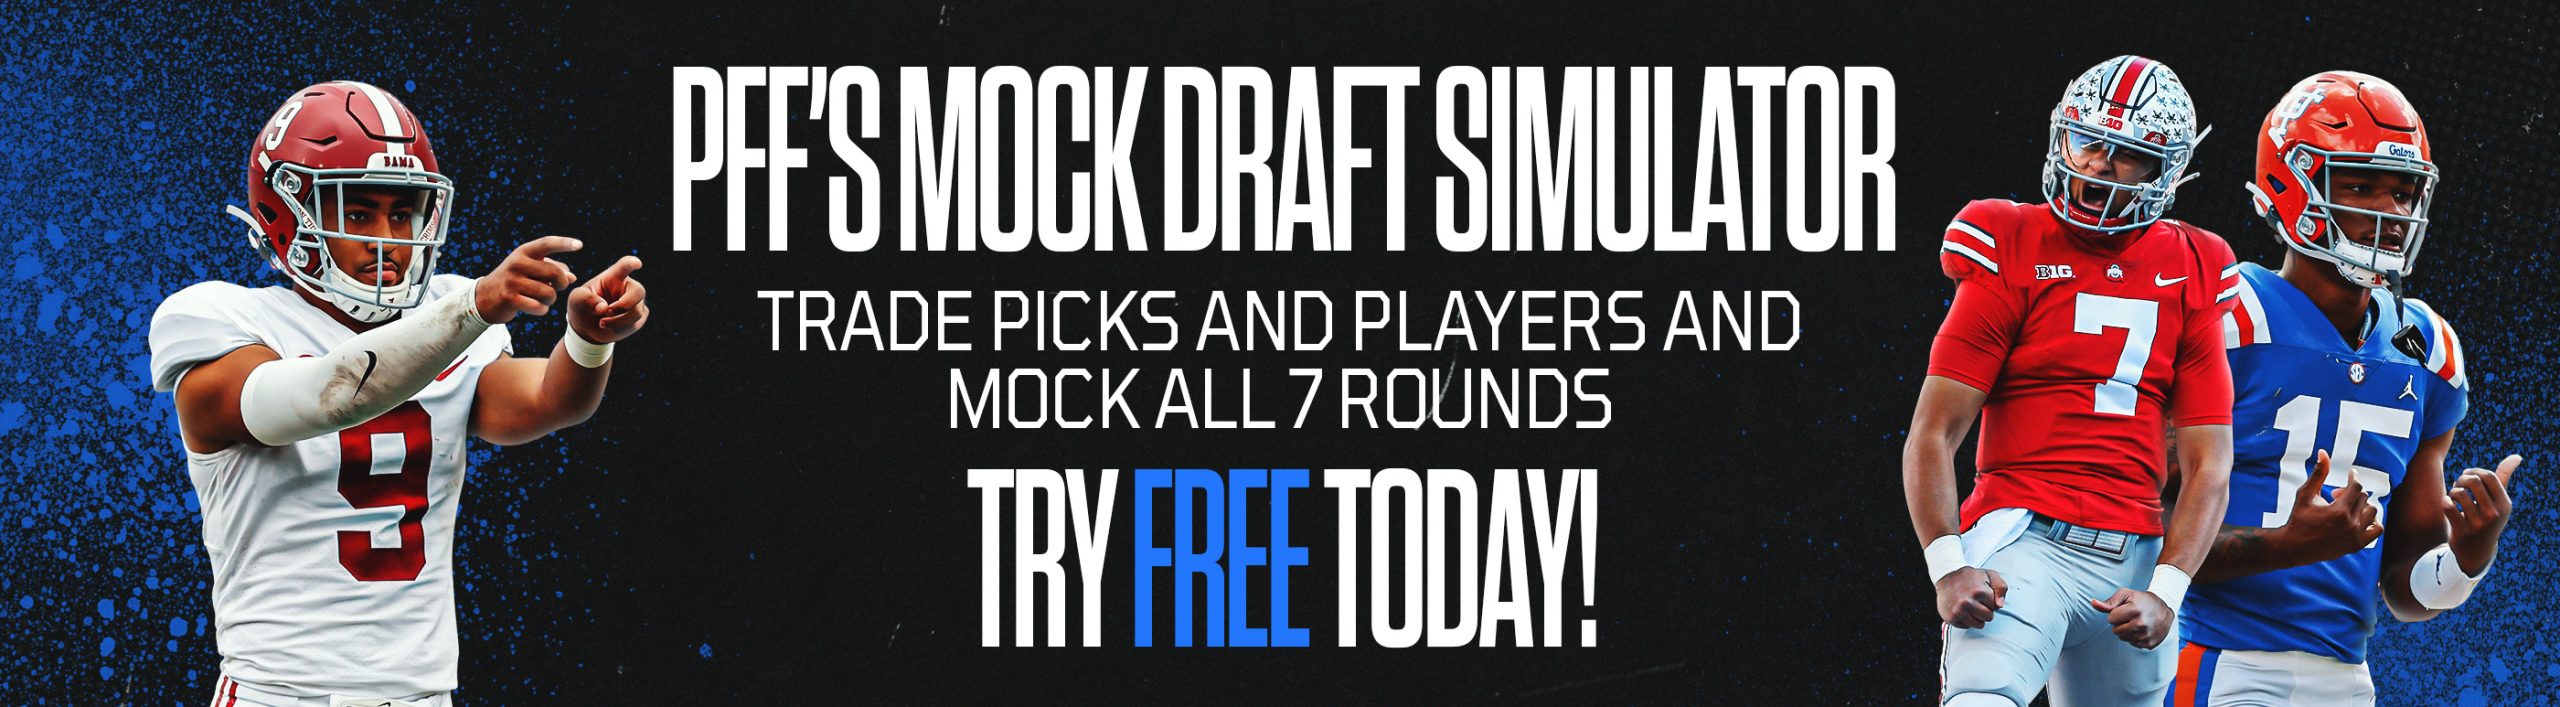 mock draft 4th pick